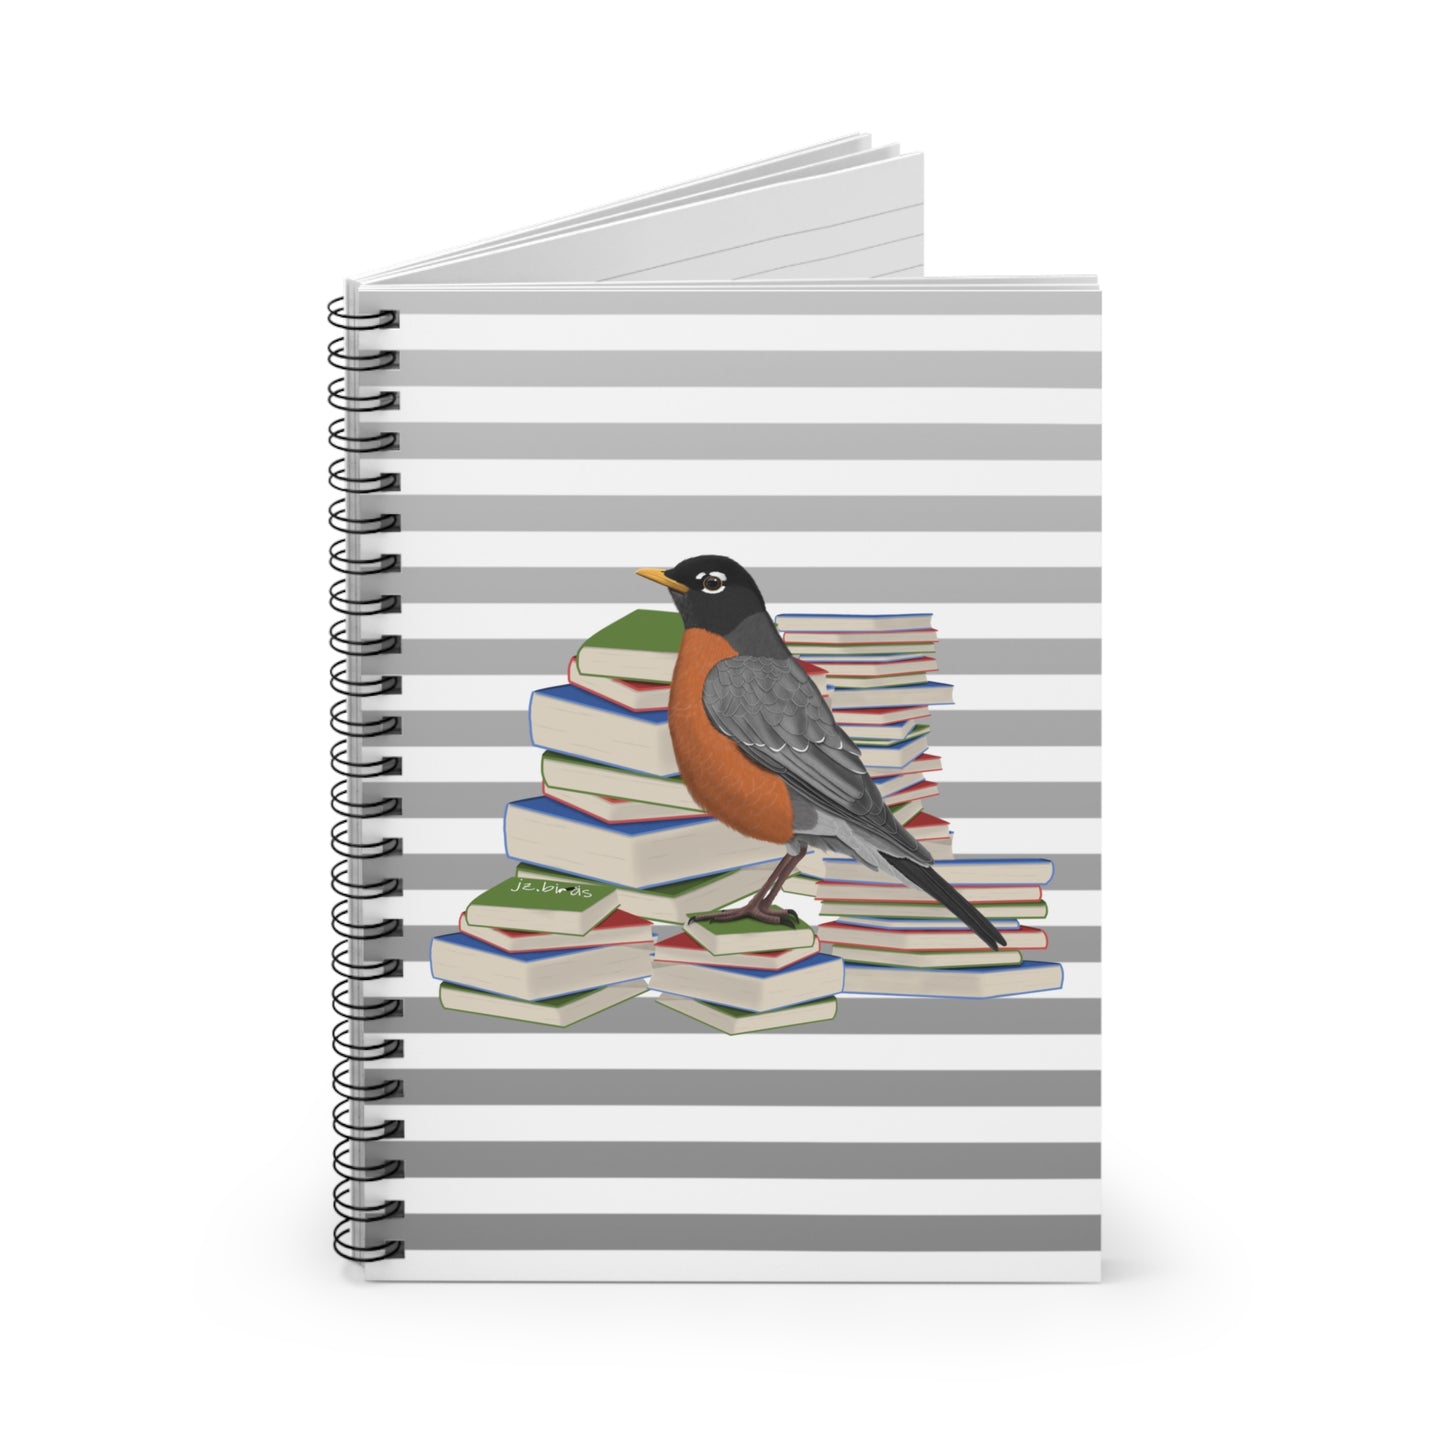 Robin Bird with Books Birdlover Bookworm Spiral Notebook Ruled Line 6" x 8"